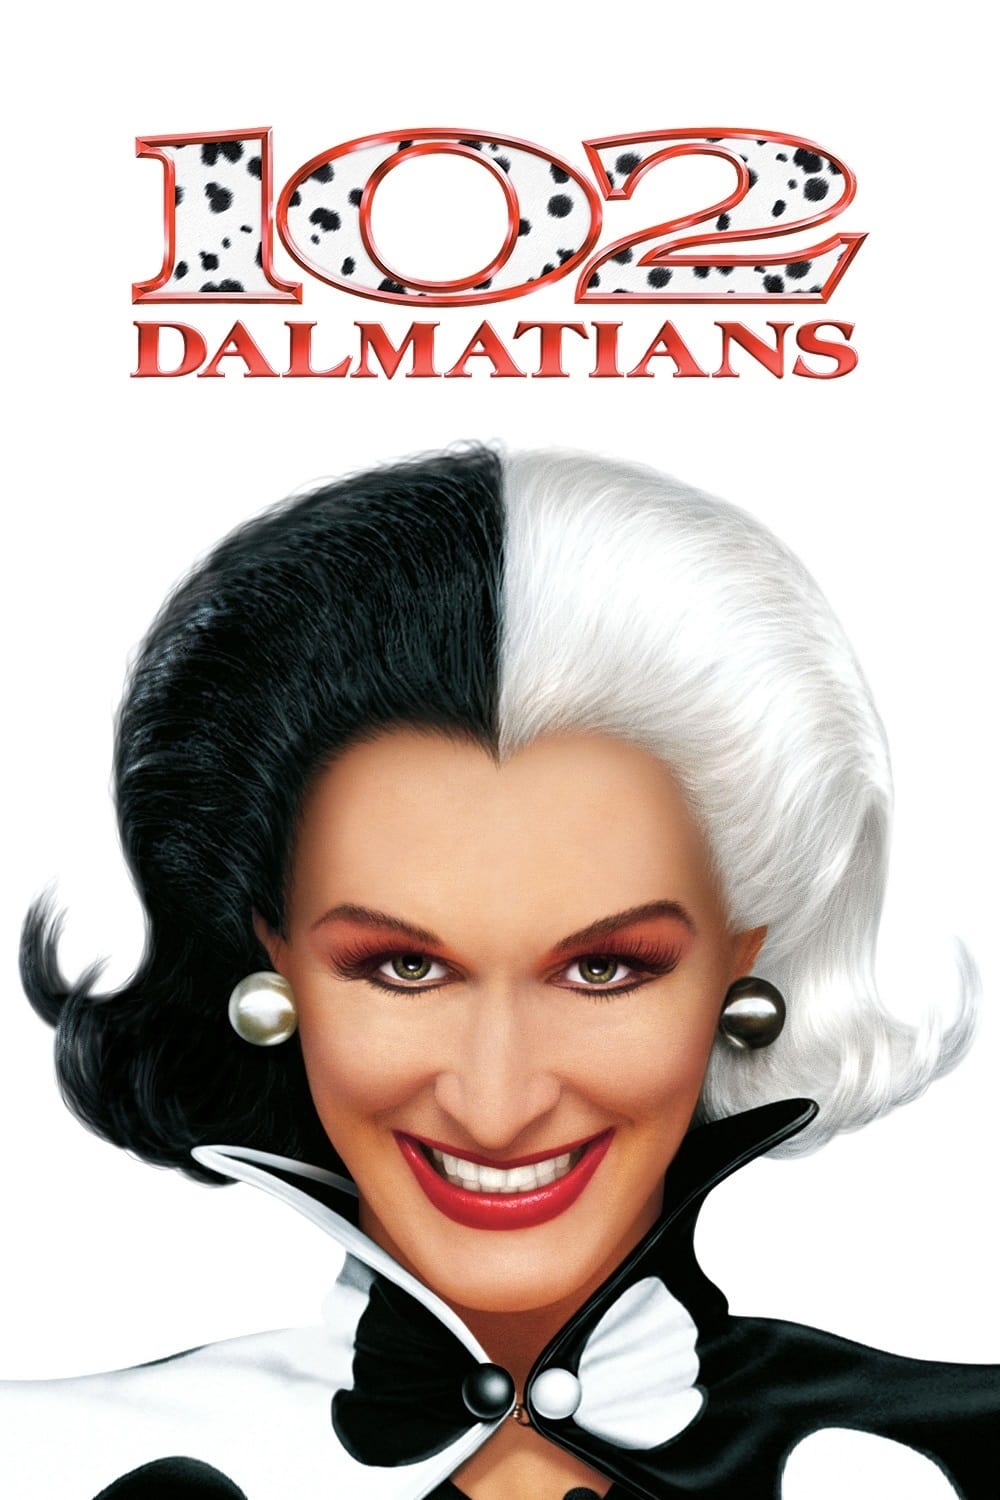 102 Dalmatians Main Poster